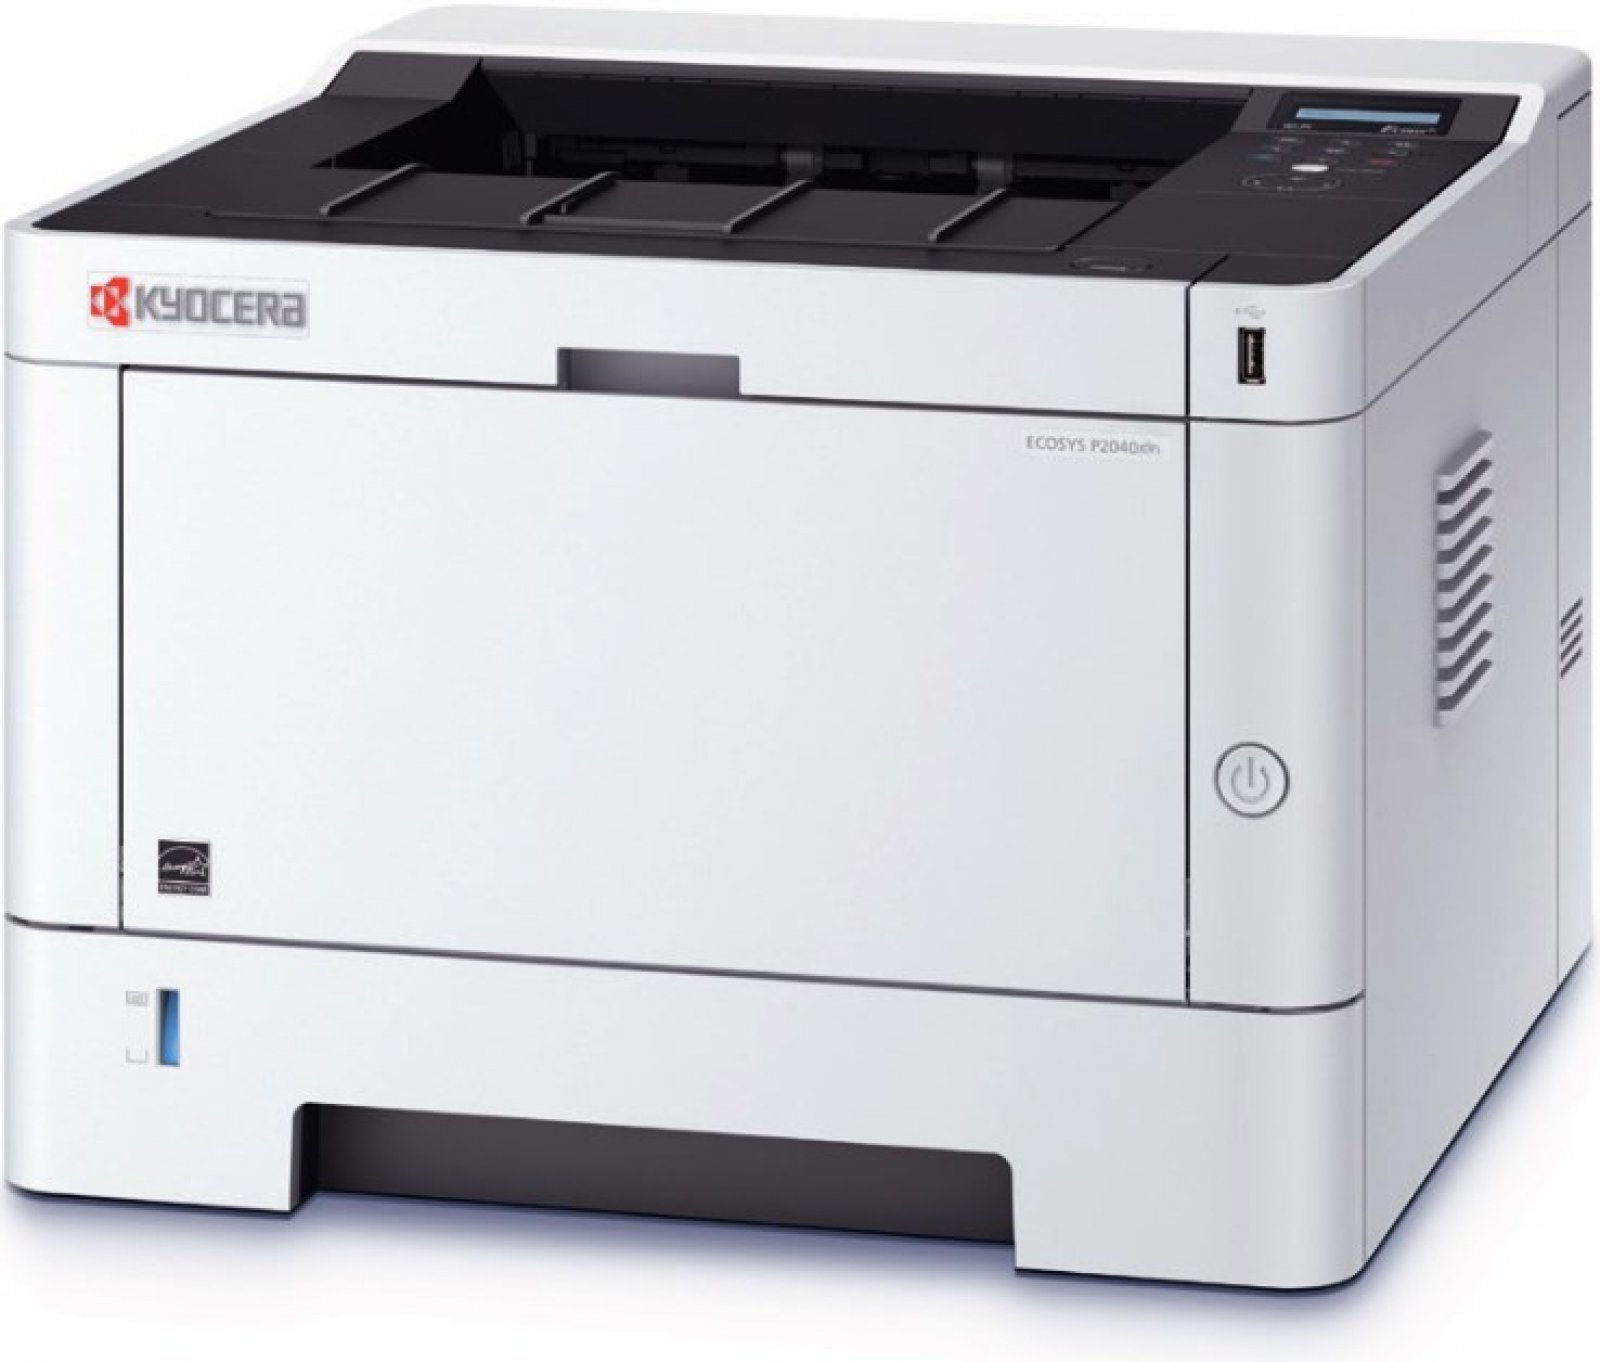 Image of Kyocera ECOSYS P2040dn 1102RX3NL0 imprimante laser RO ID 408085